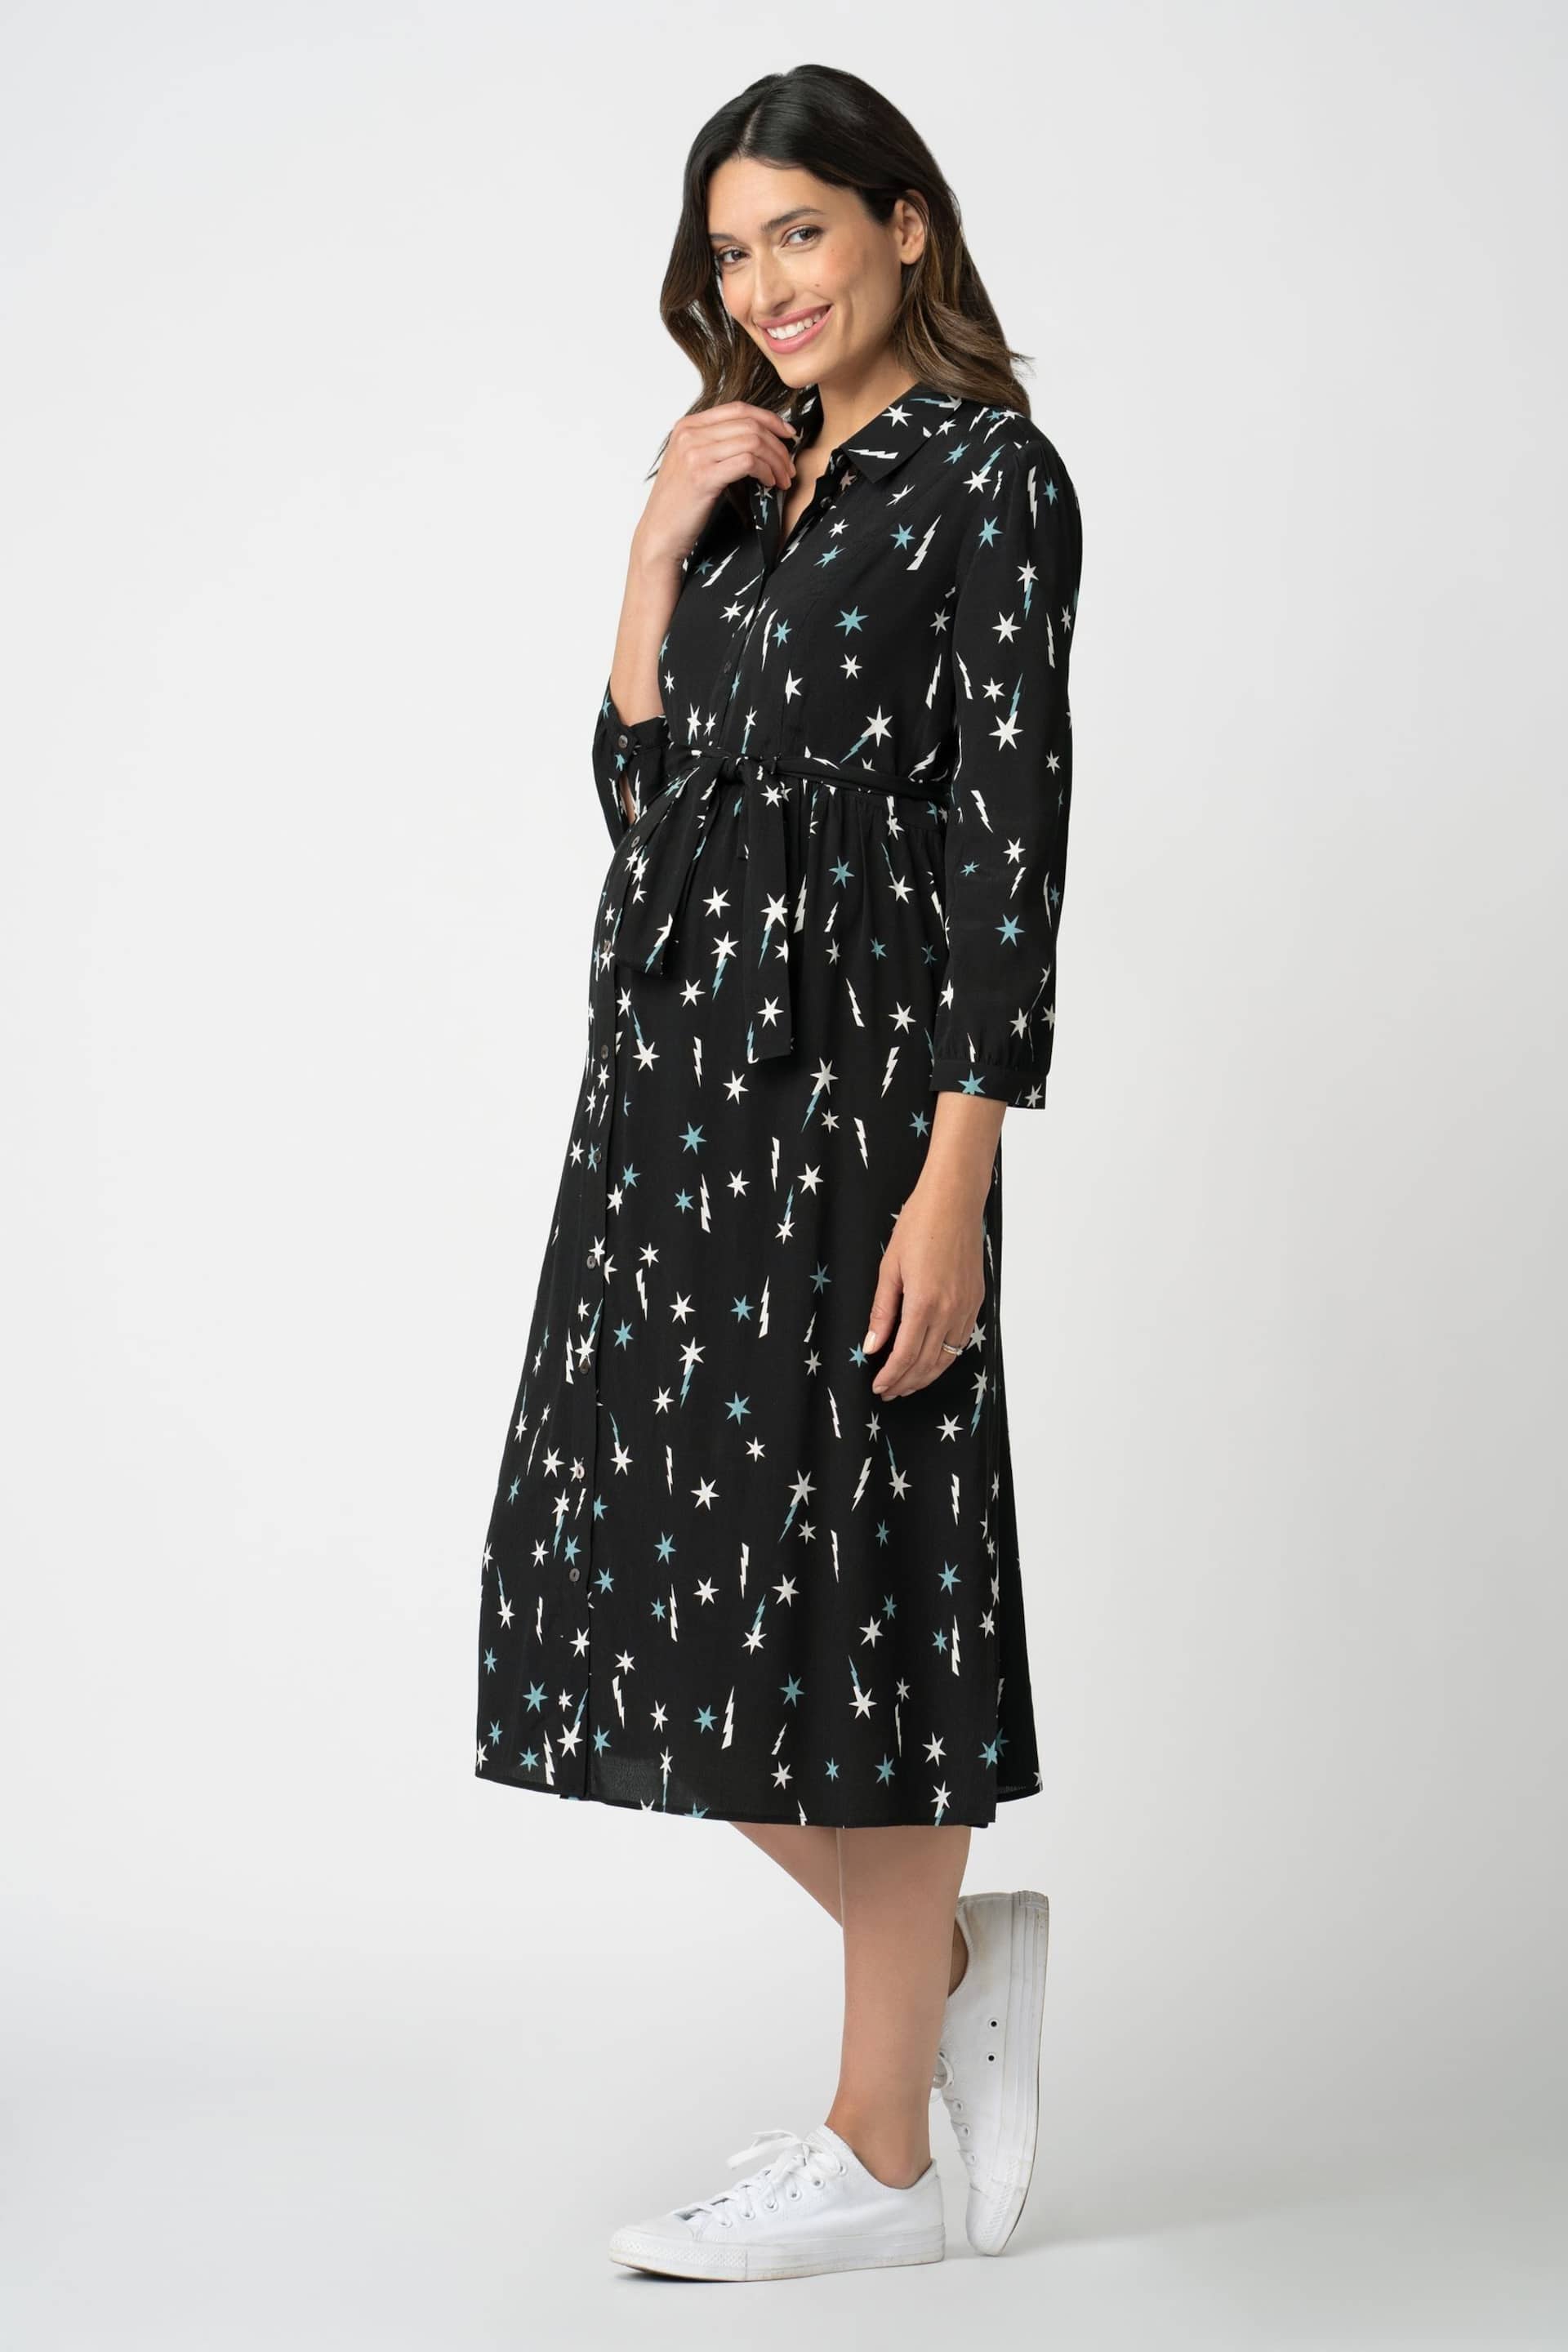 Seraphine Star Print Midi Black Shirt Dress - Image 3 of 6